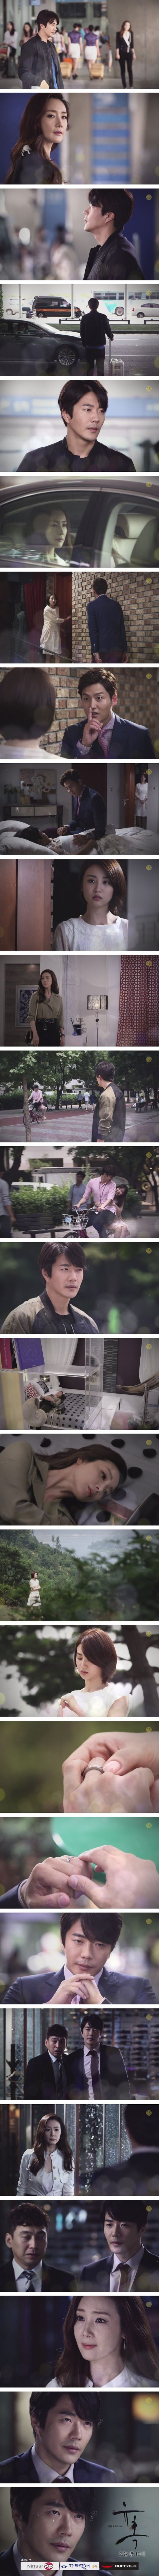 episode 3 captures for the Korean drama 'Temptation'